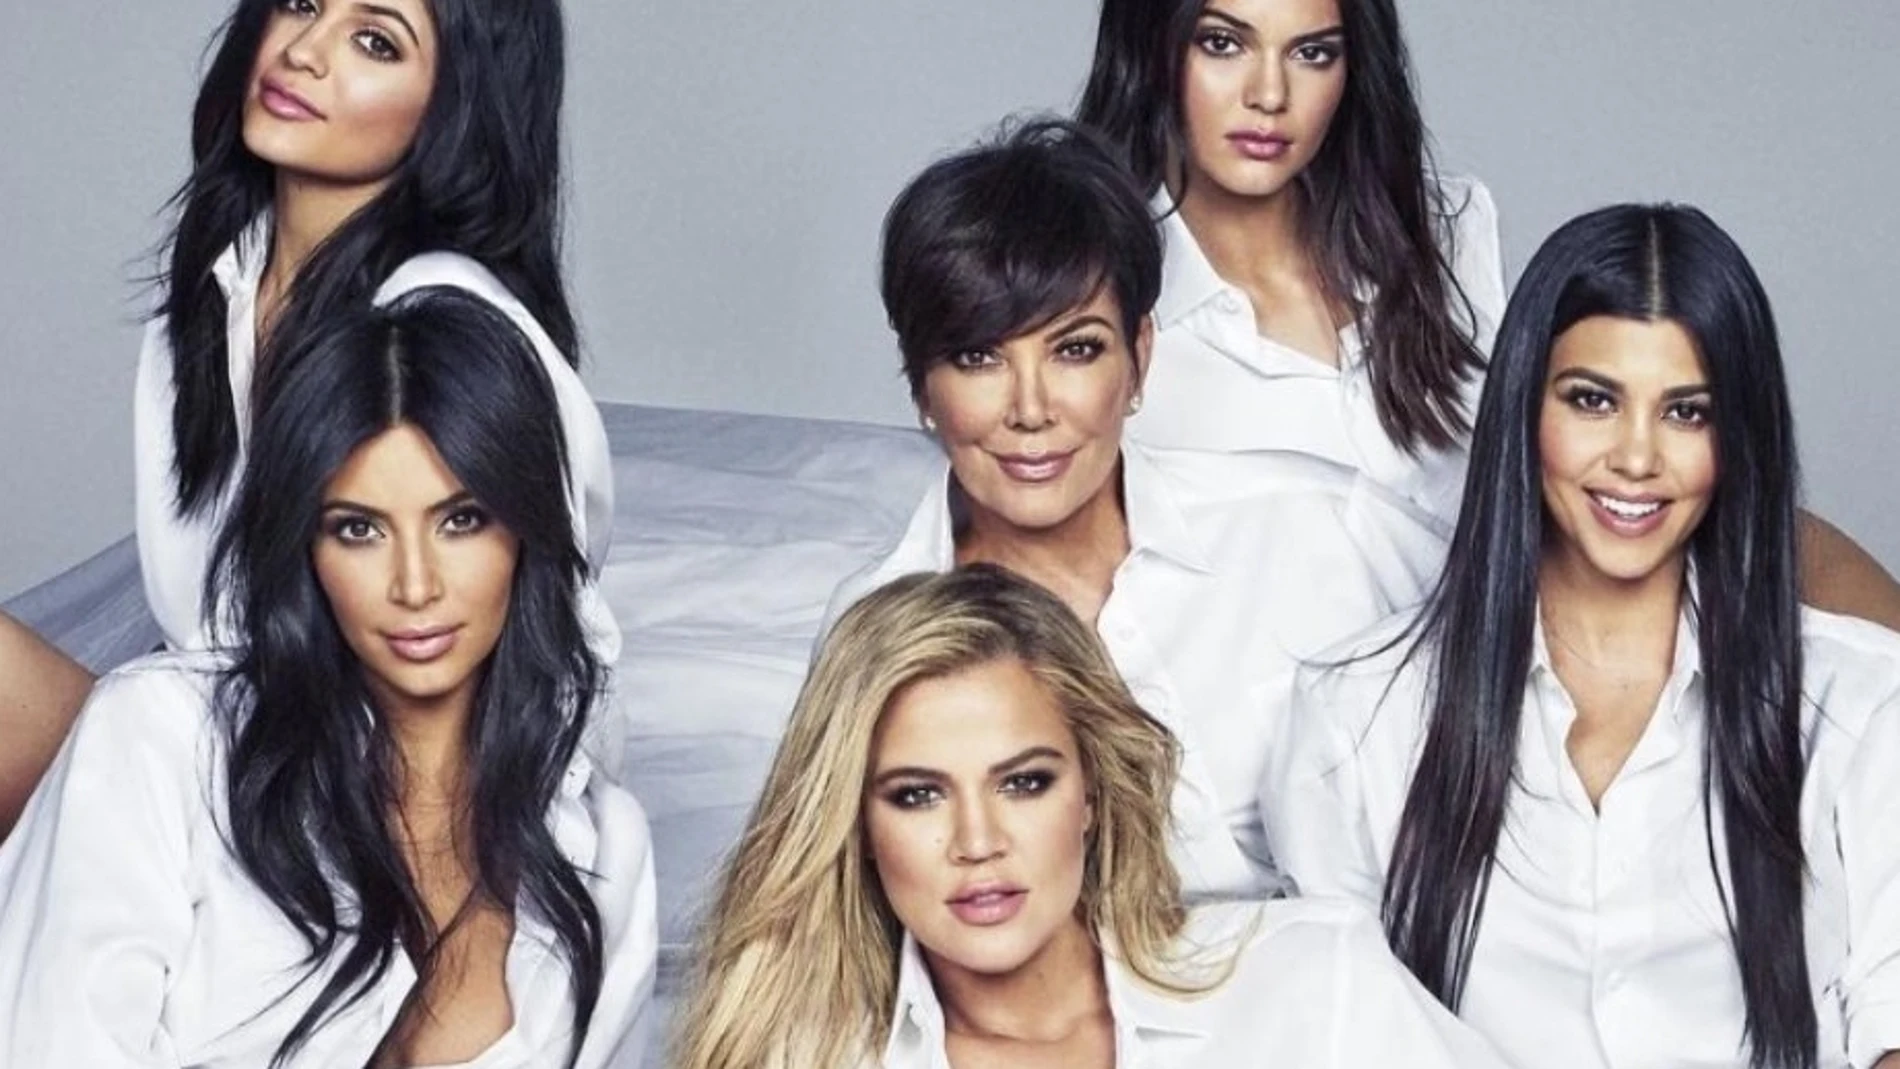 Familia Kardashian-Jenner